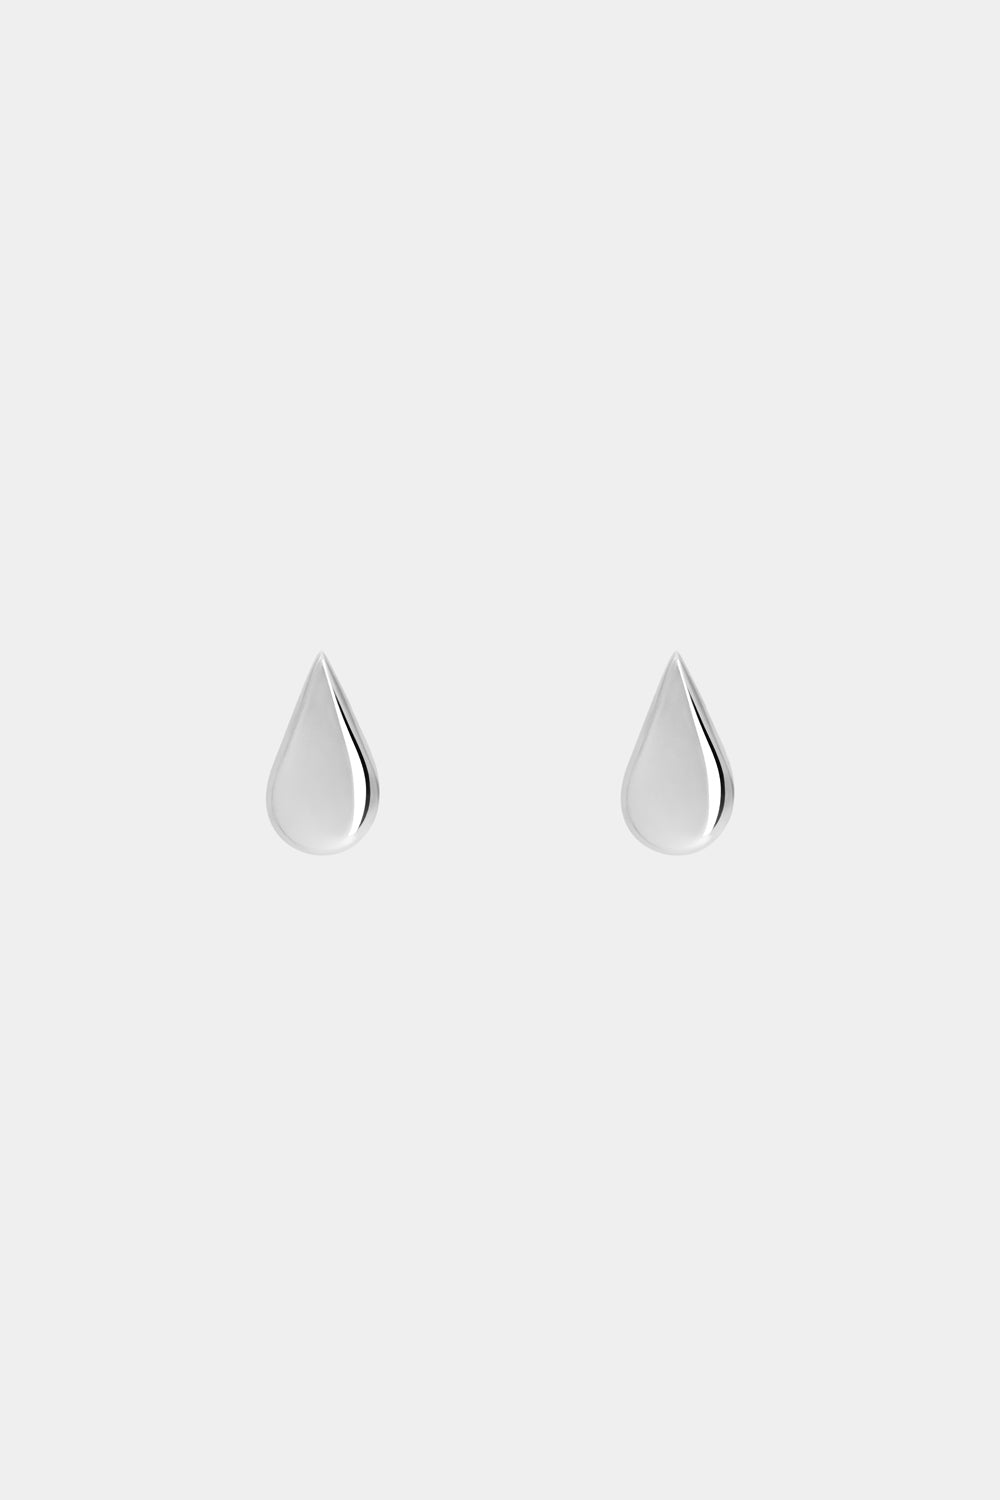 Pear Stud Earrings | Silver or 9K White Gold